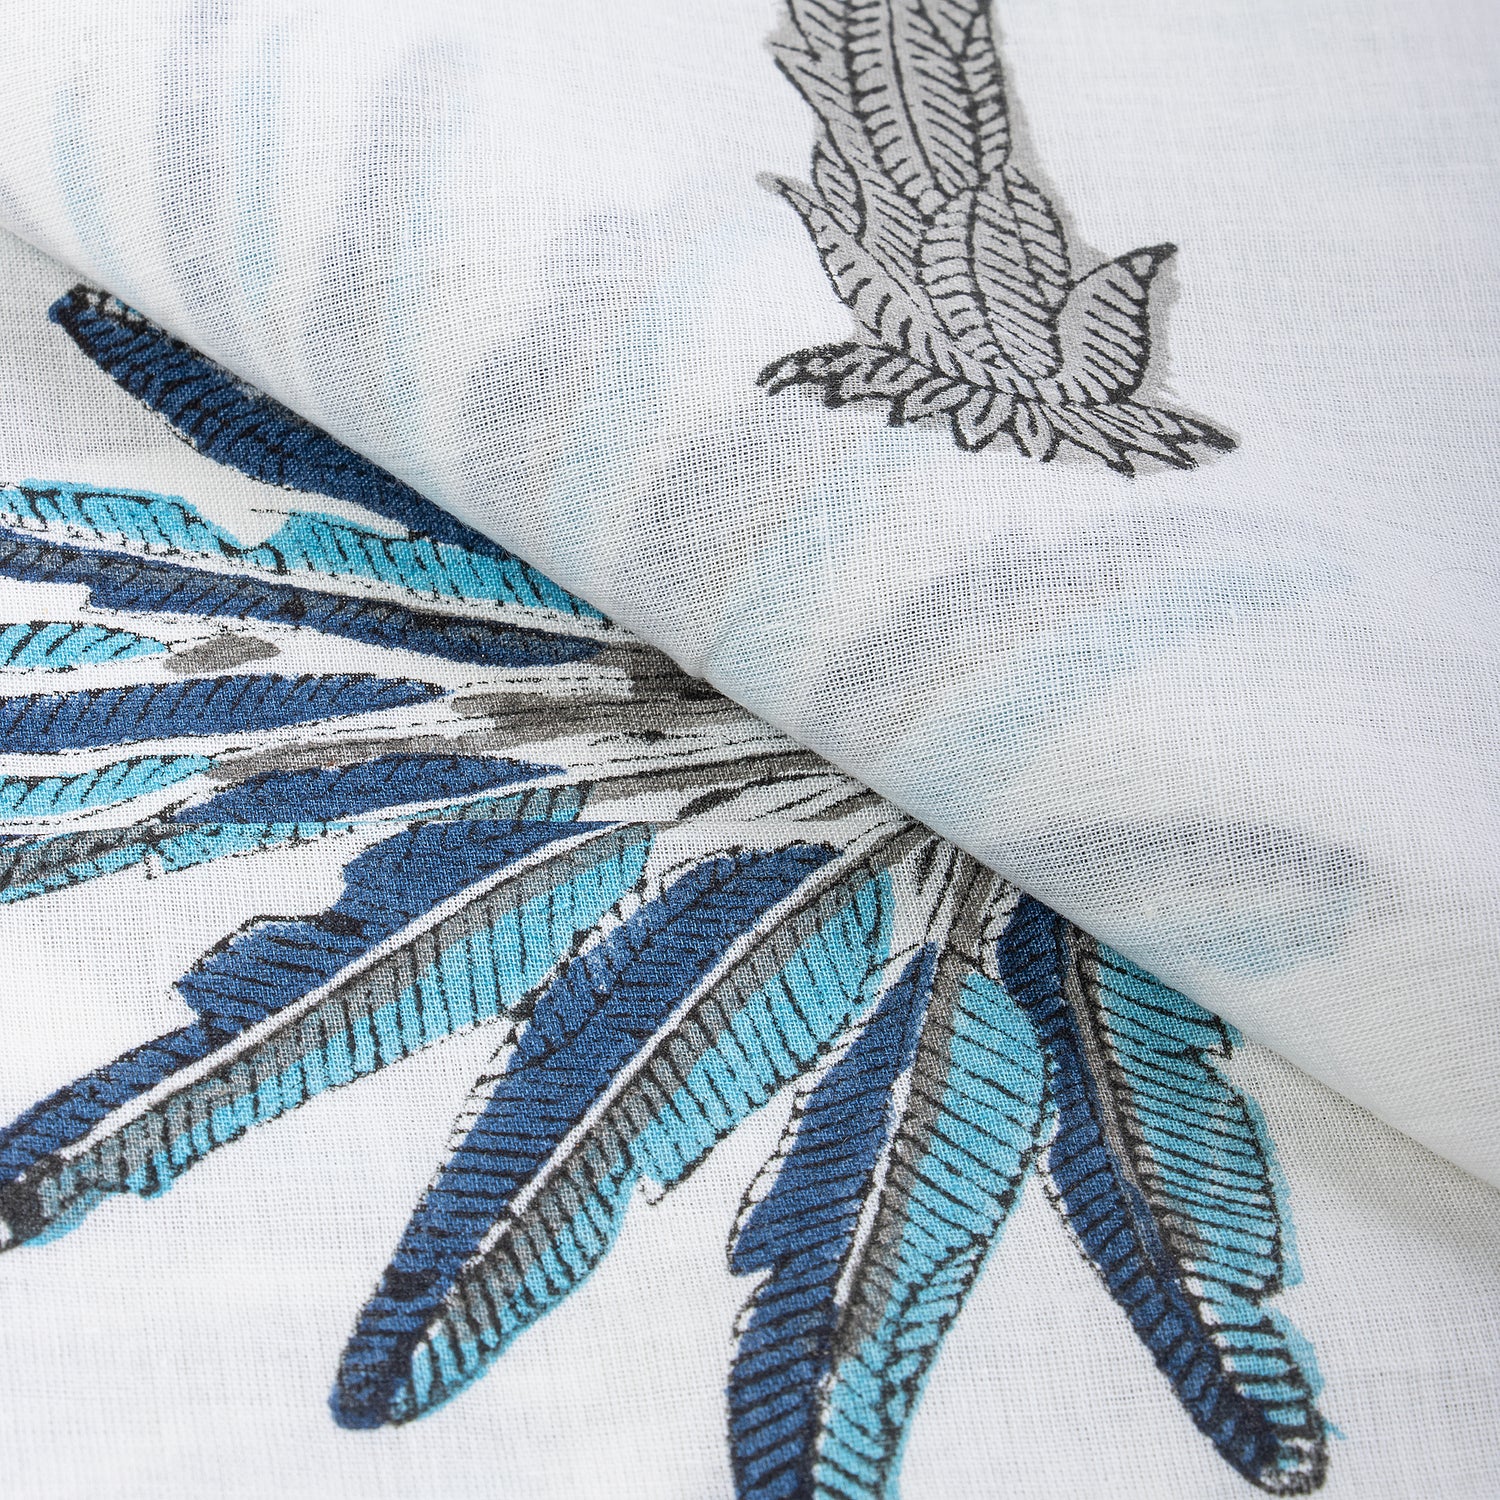 Sky Blue Soft Cotton Fabric Palm Tree Print